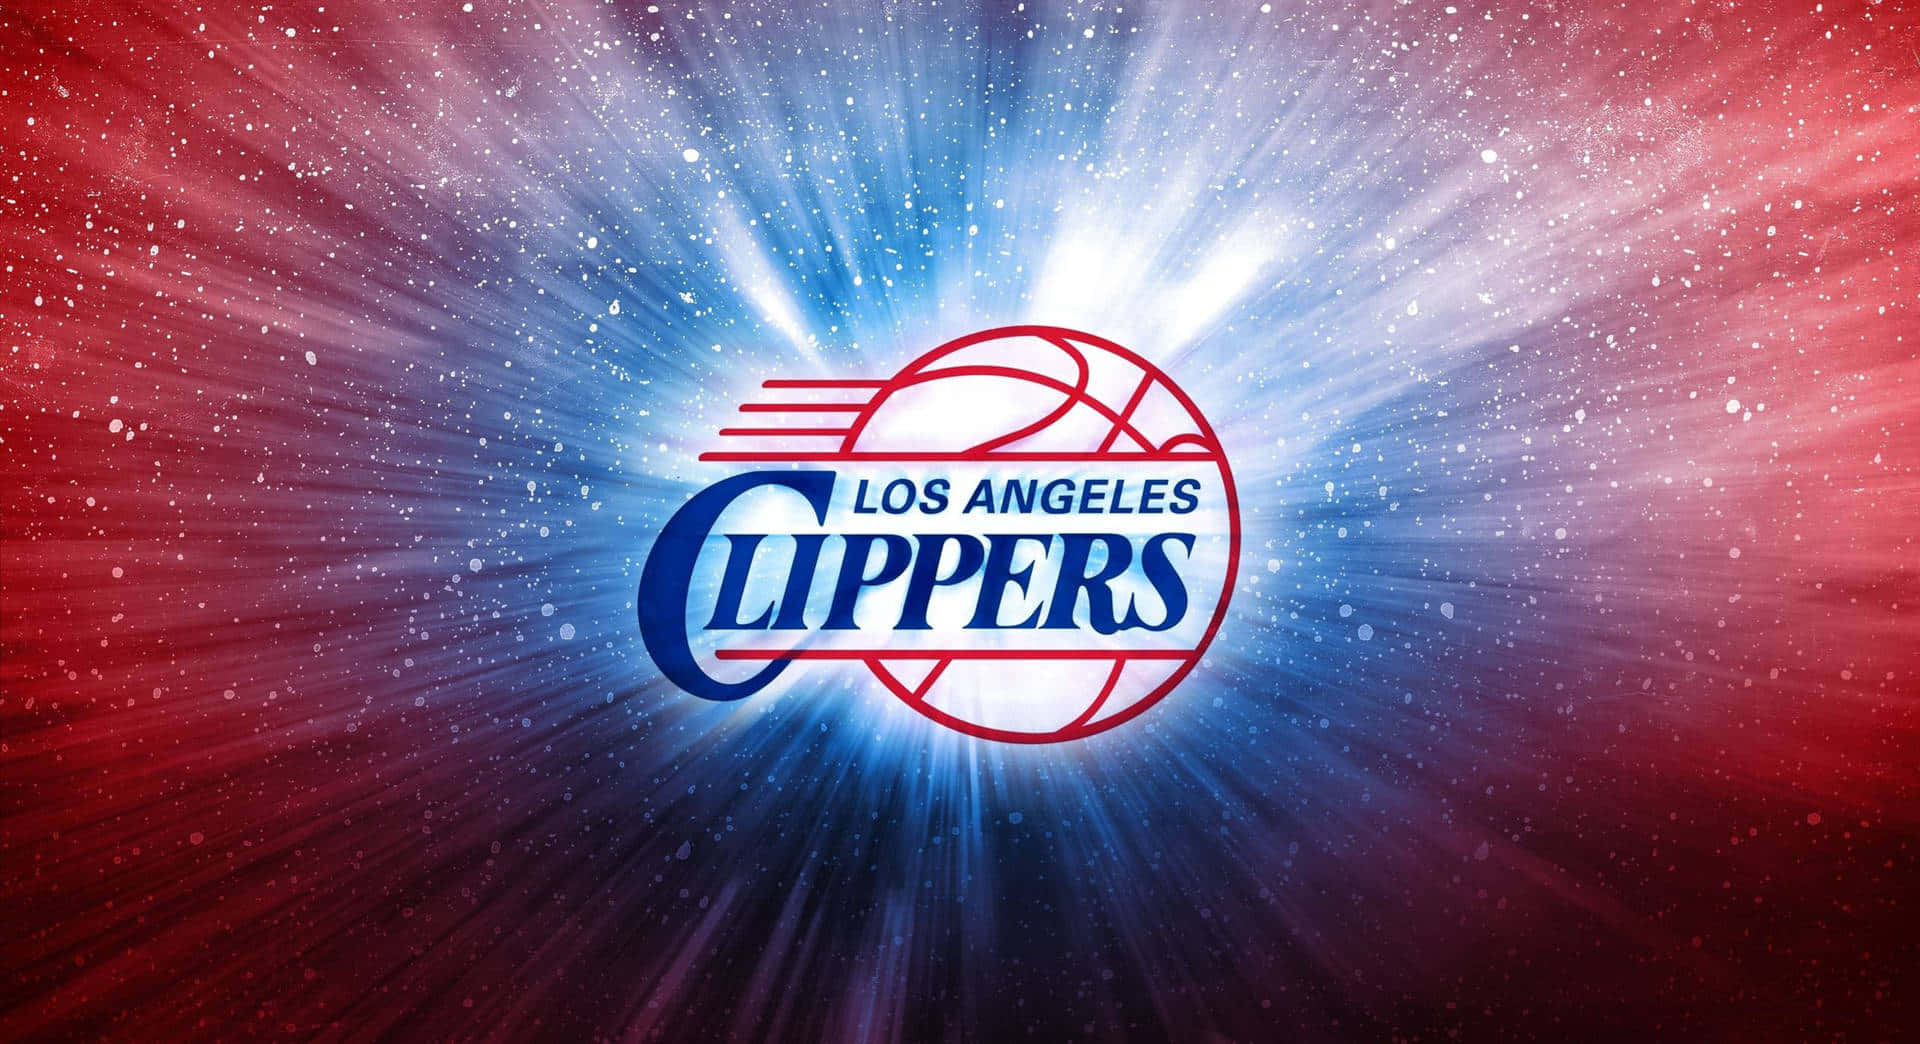 LA Clippers Logo Illuminated against a Stellar Galaxy Wallpaper